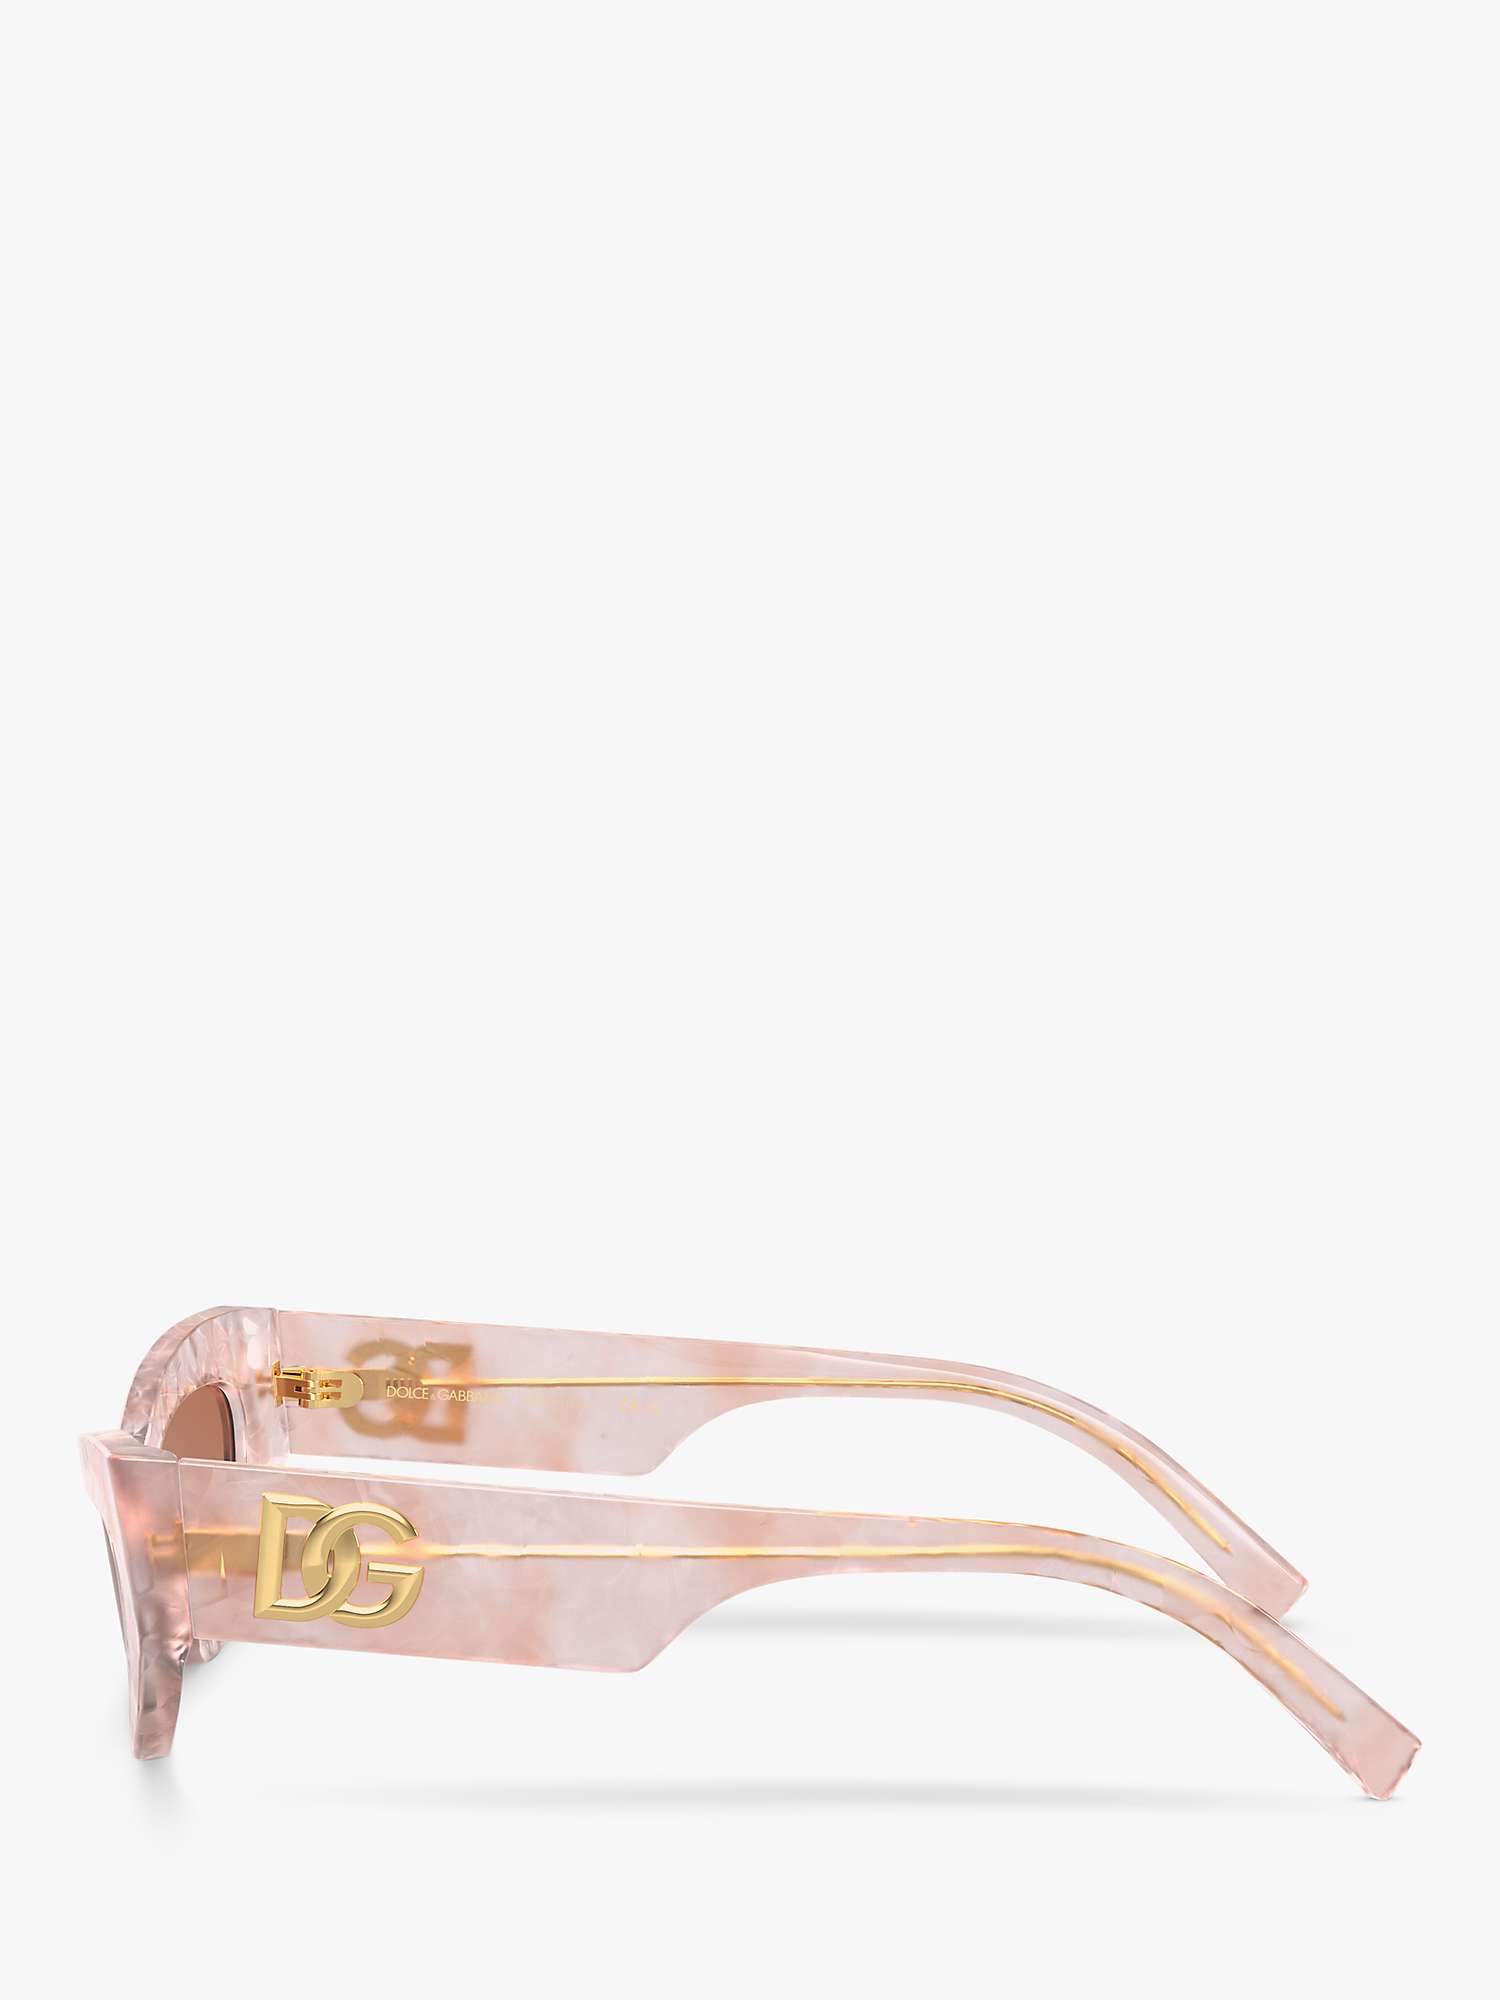 Buy Dolce & Gabbana DG4450 Women's Cat's Eye Sunglasses, Madre Perla Pink/Brown Gradient Online at johnlewis.com